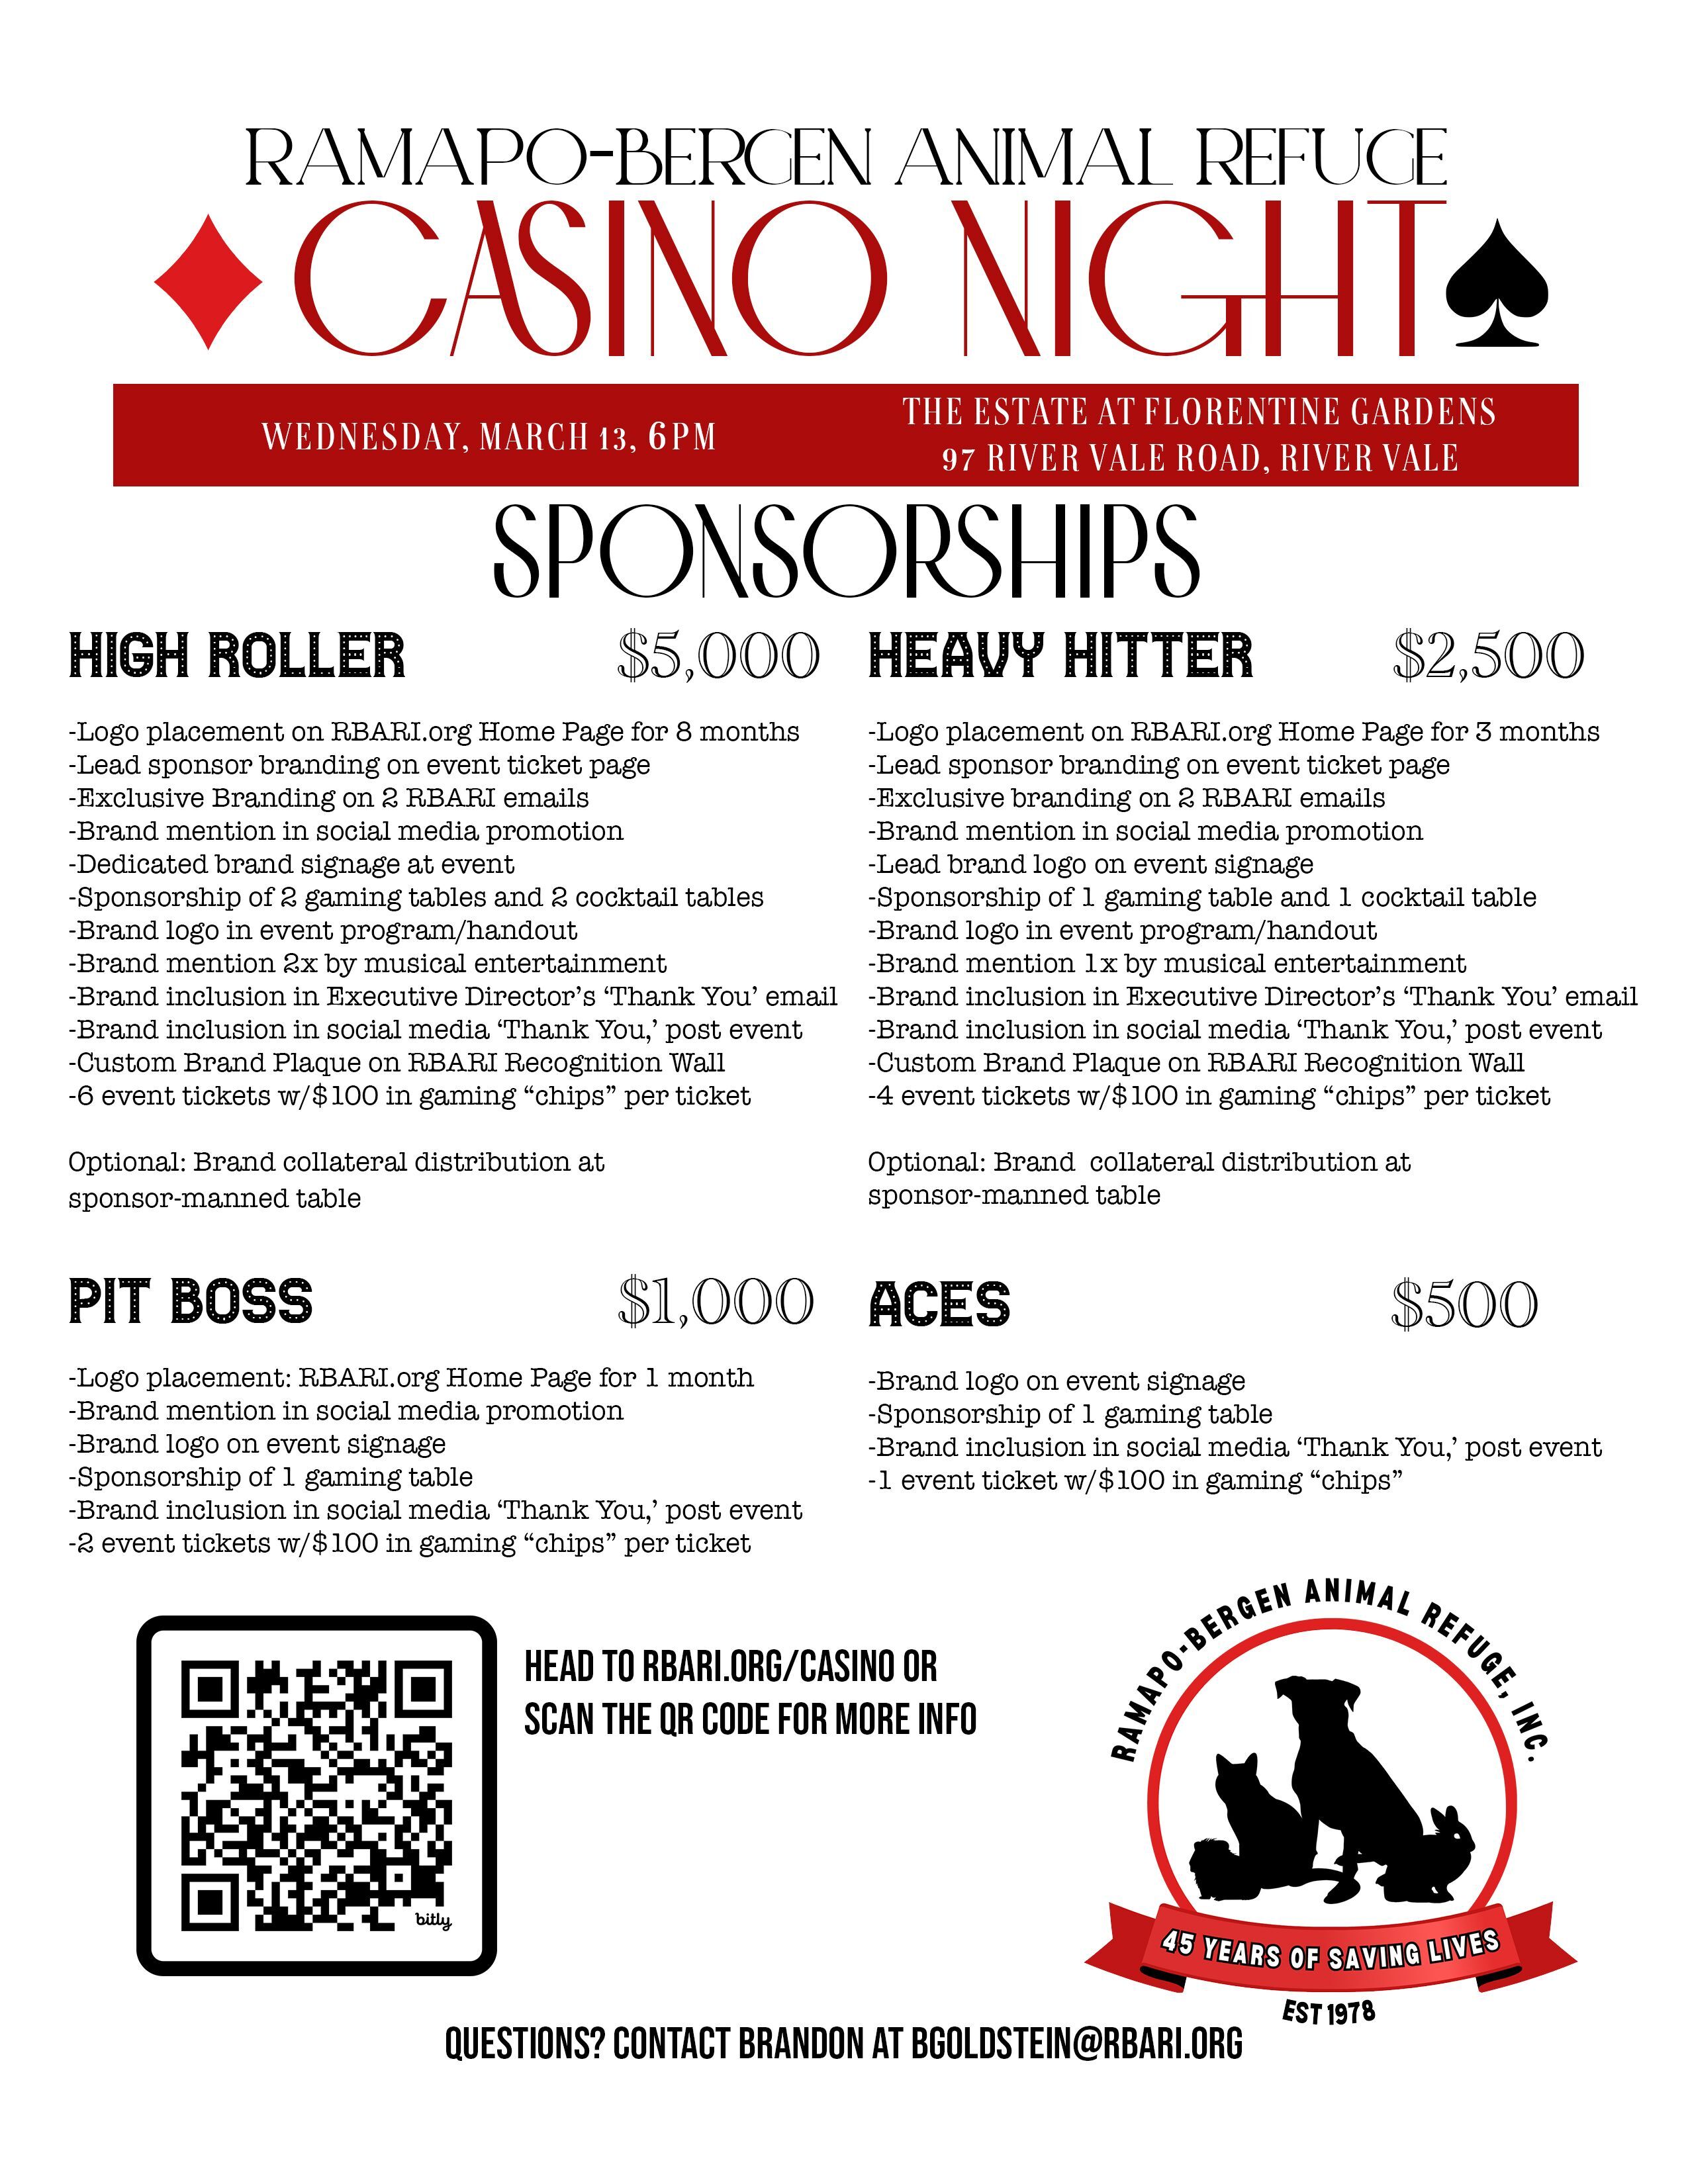 Casino Night (Sponsorships)